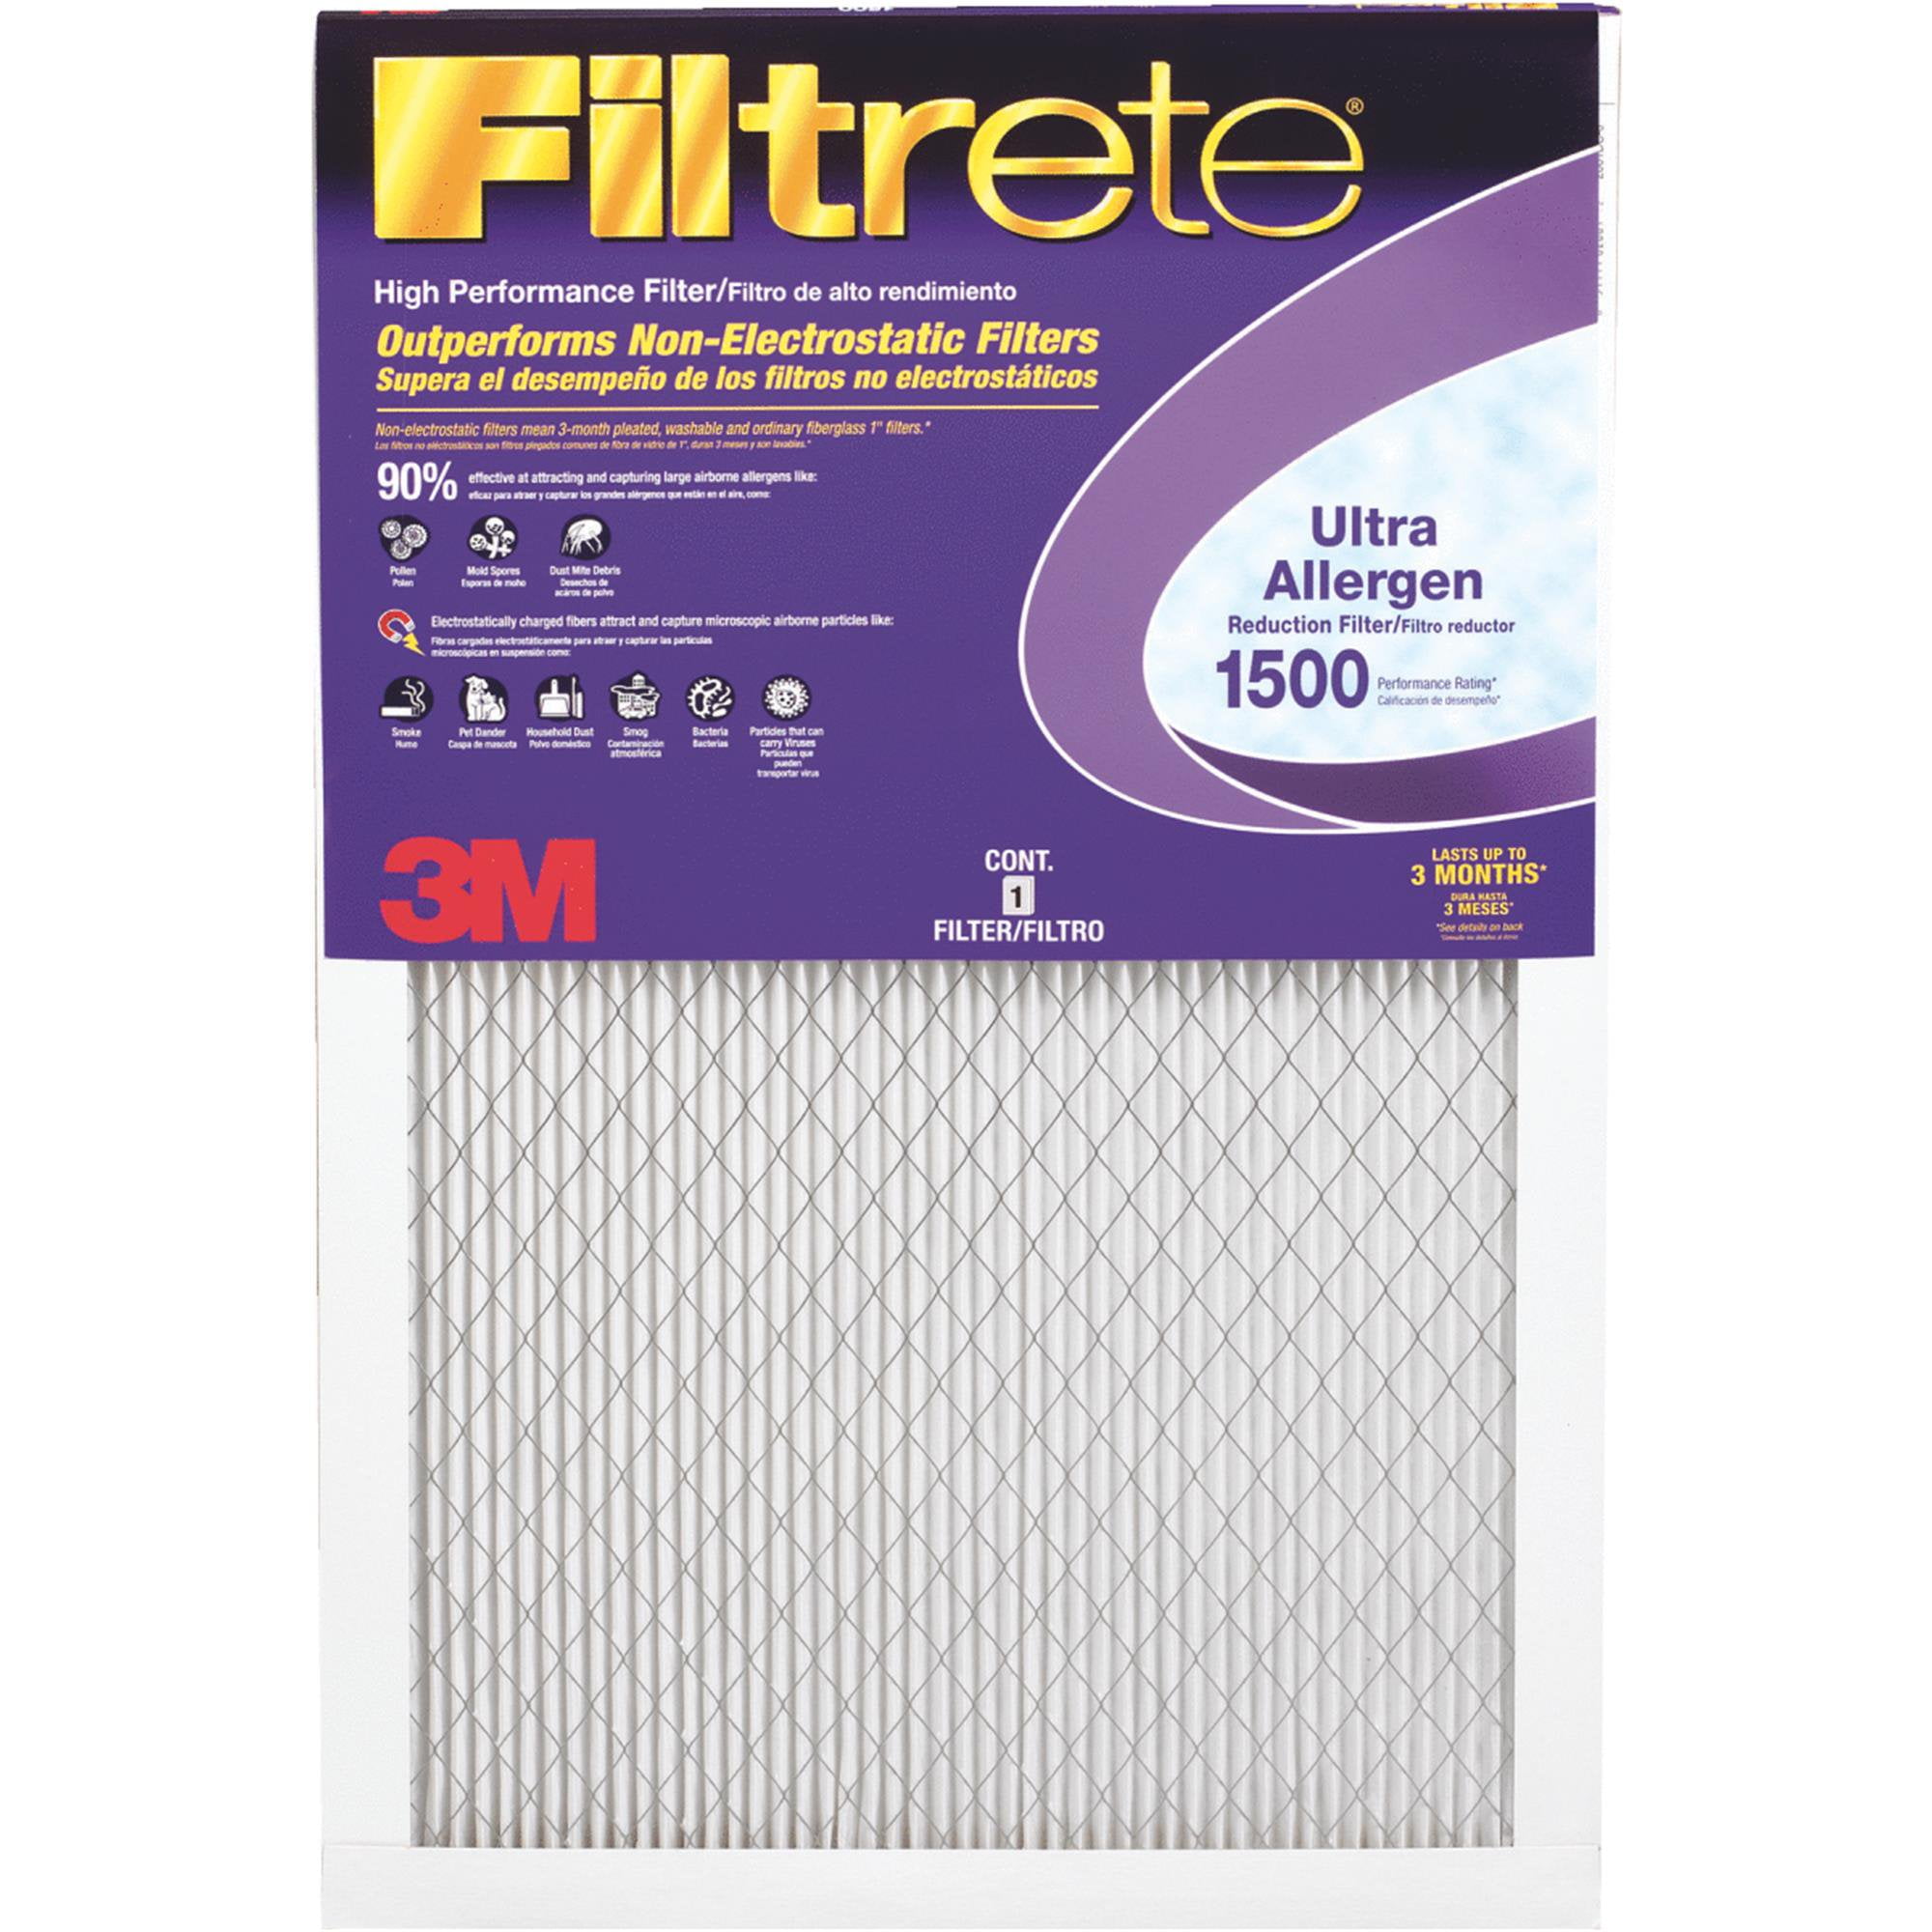 3M Filtrete Ultra Allergen Healthy Living Furnace Filter Walmart 